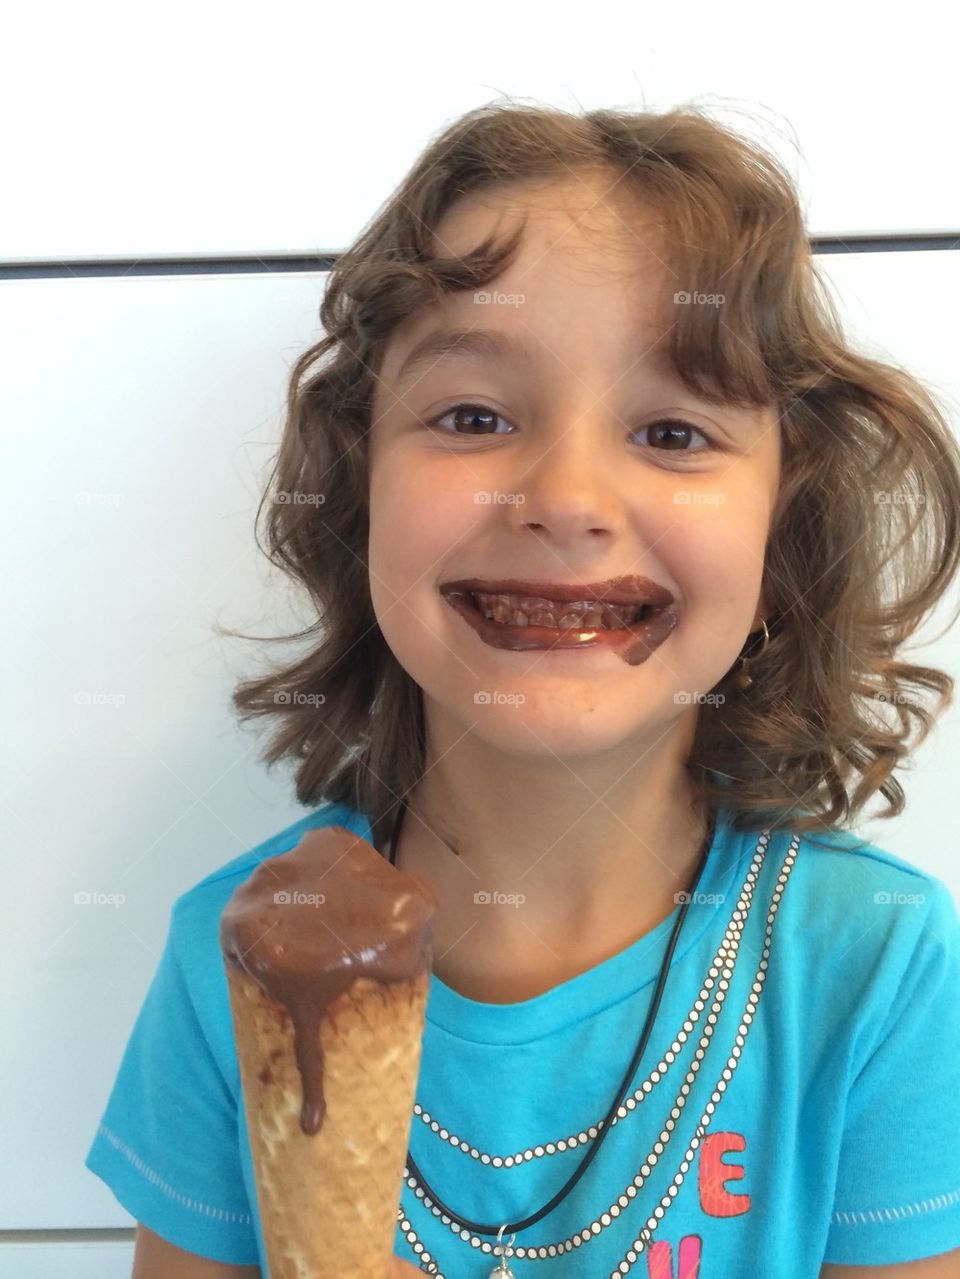 Baby girl with chocolate ice cream